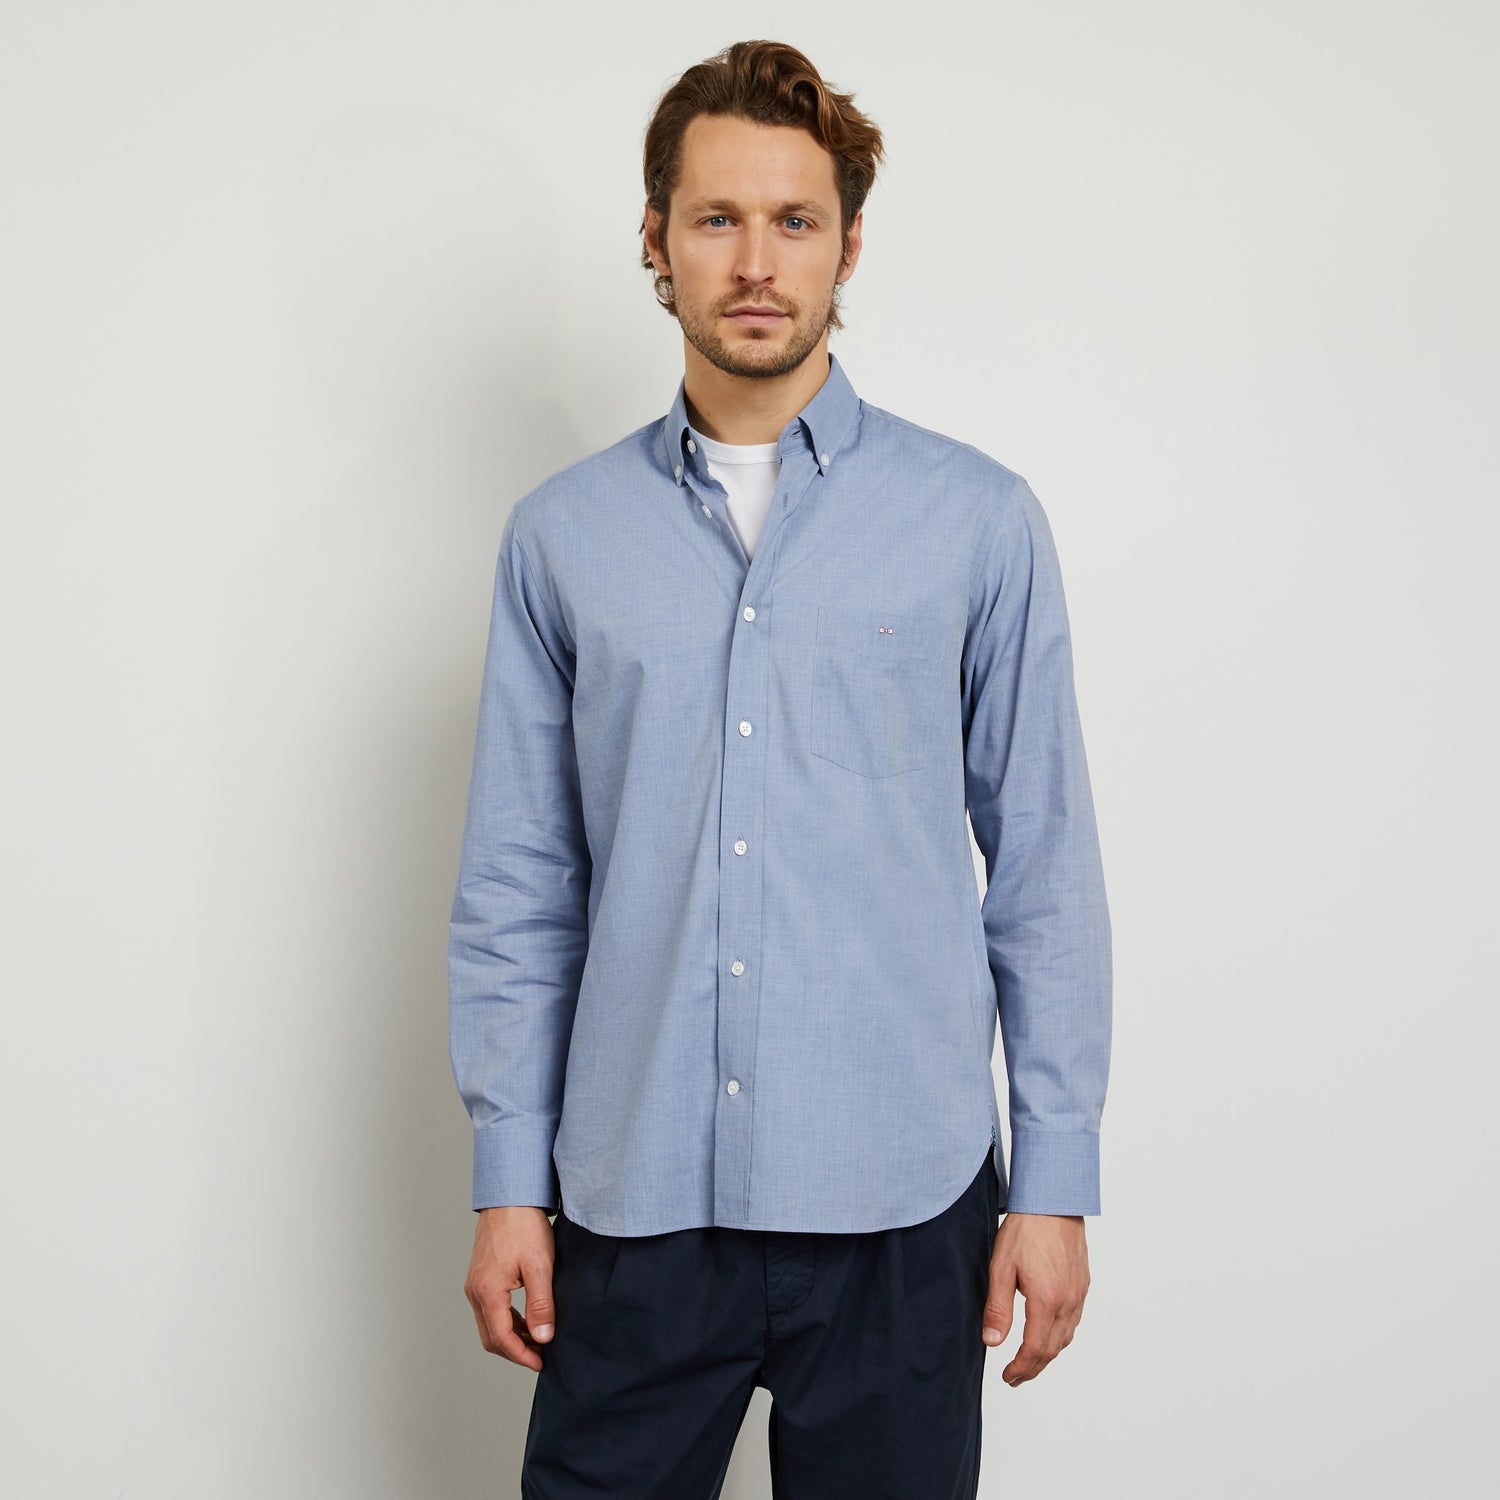 Blue Shirt In Zephyr Cotton - 02